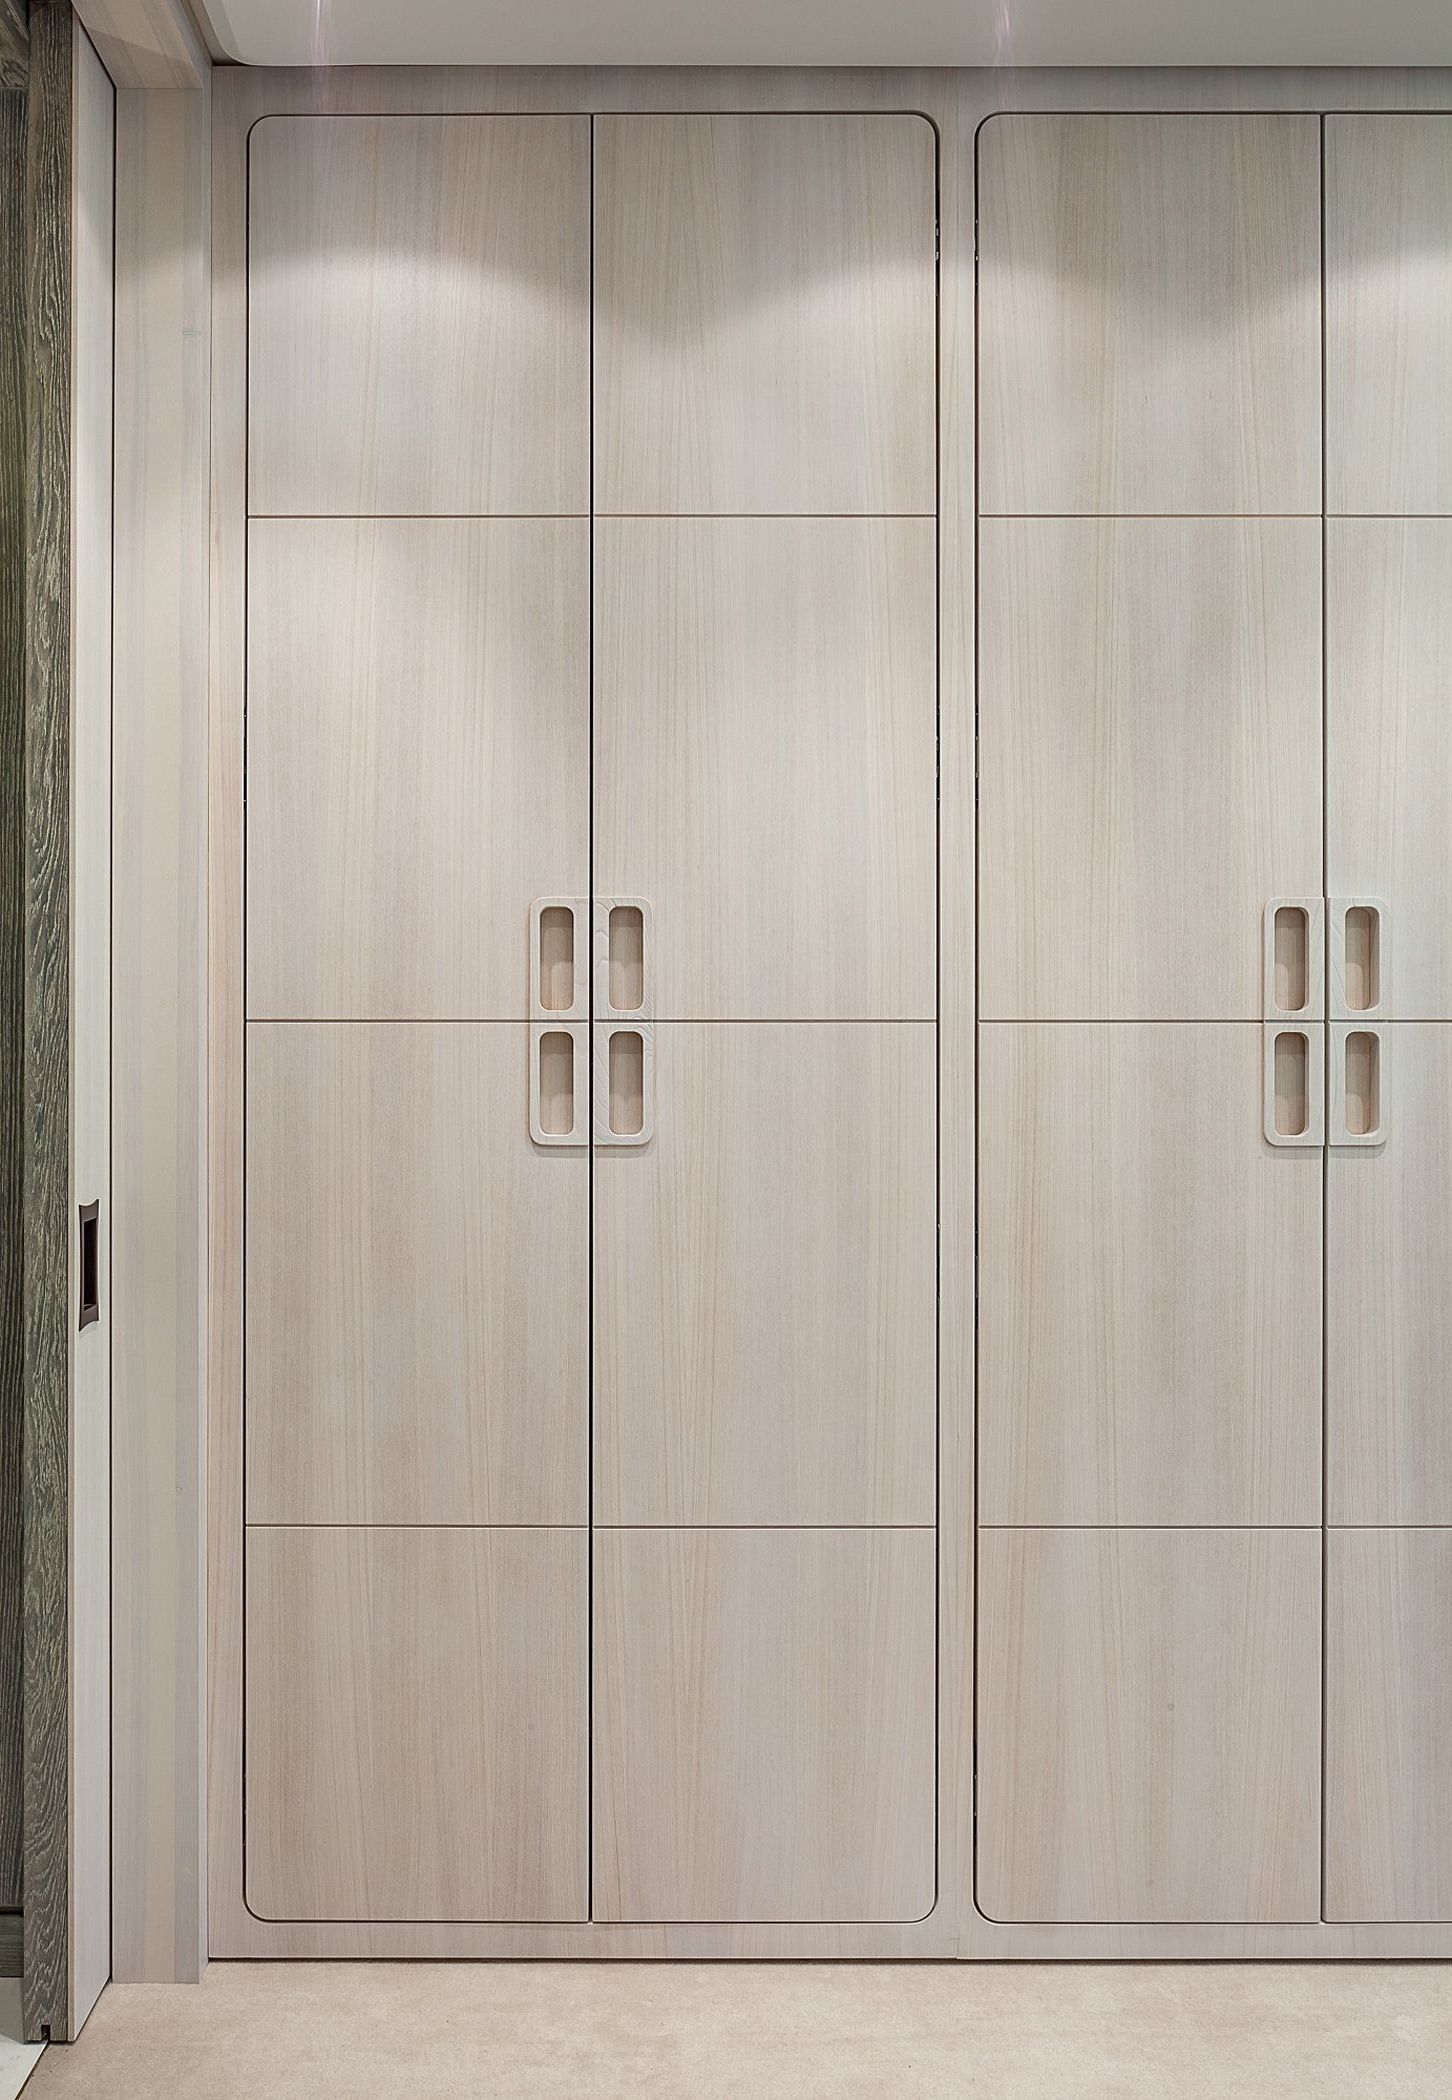 Architectural Bureau Catherine Fedorchenko With Regard To Newest Curved Wardrobe Doors (Photo 14 of 15)